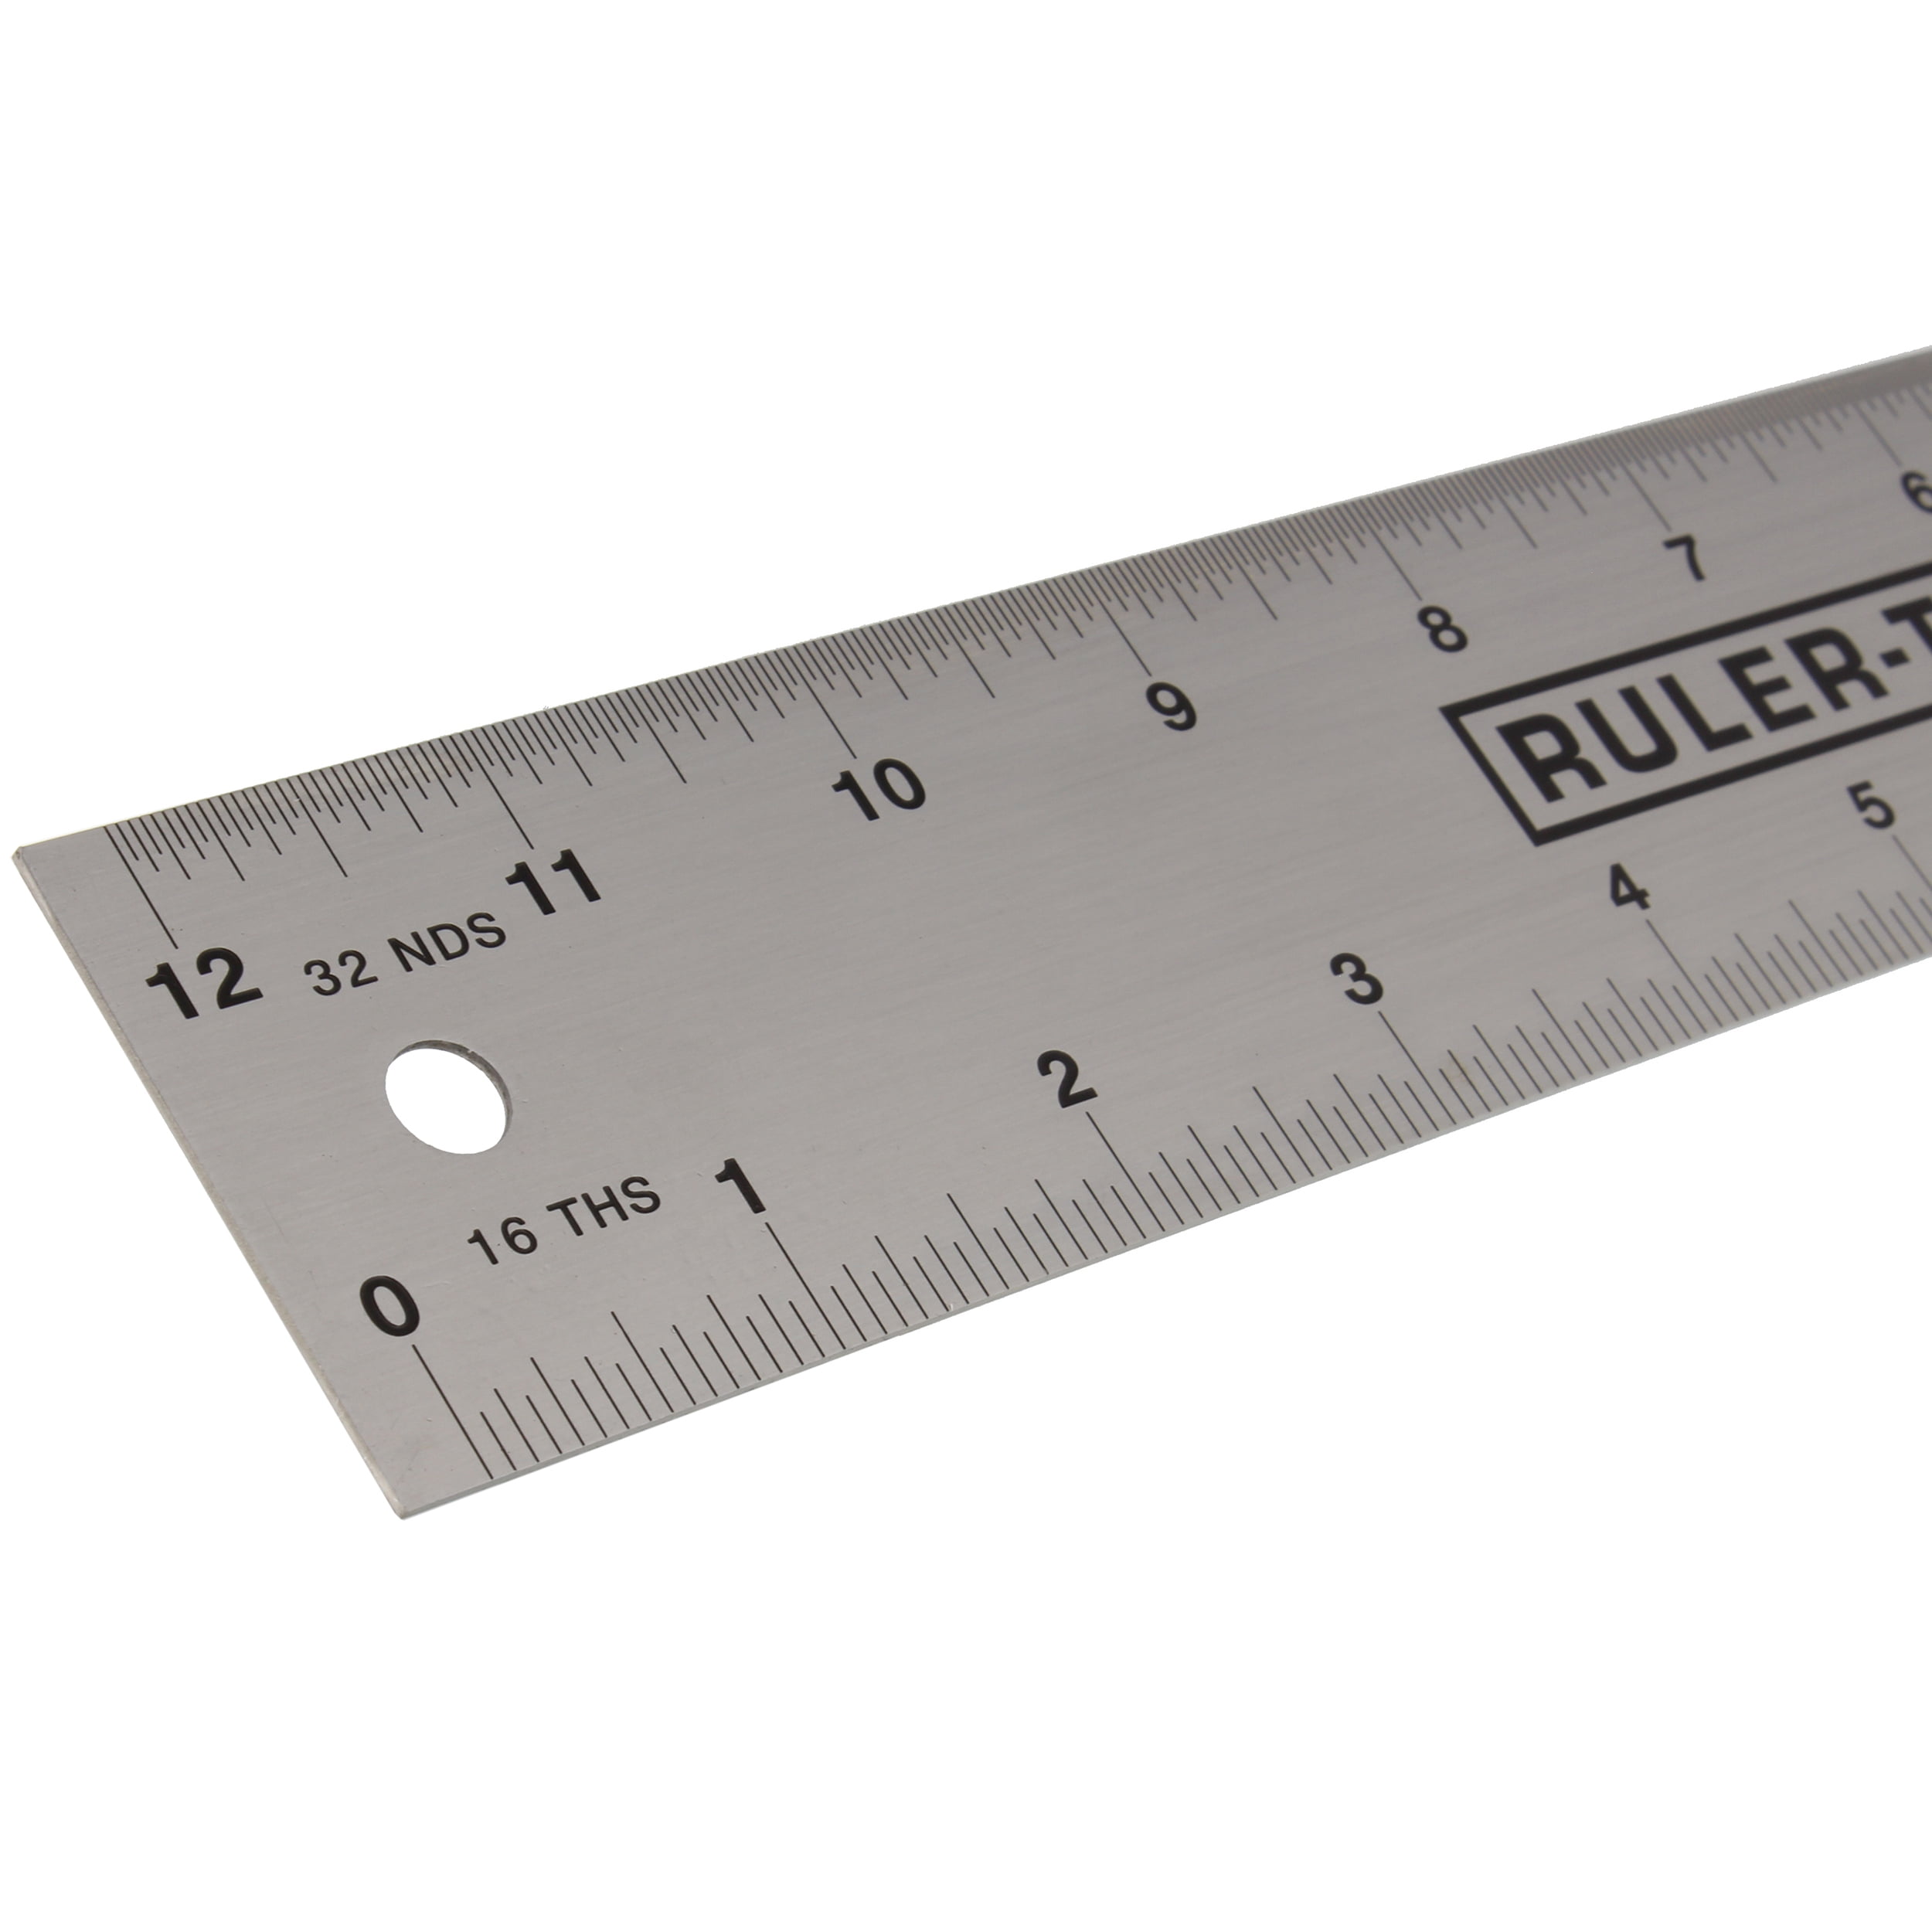 Centering Ruler by Sew Biz - 12.5 x 2 - 0089109001193